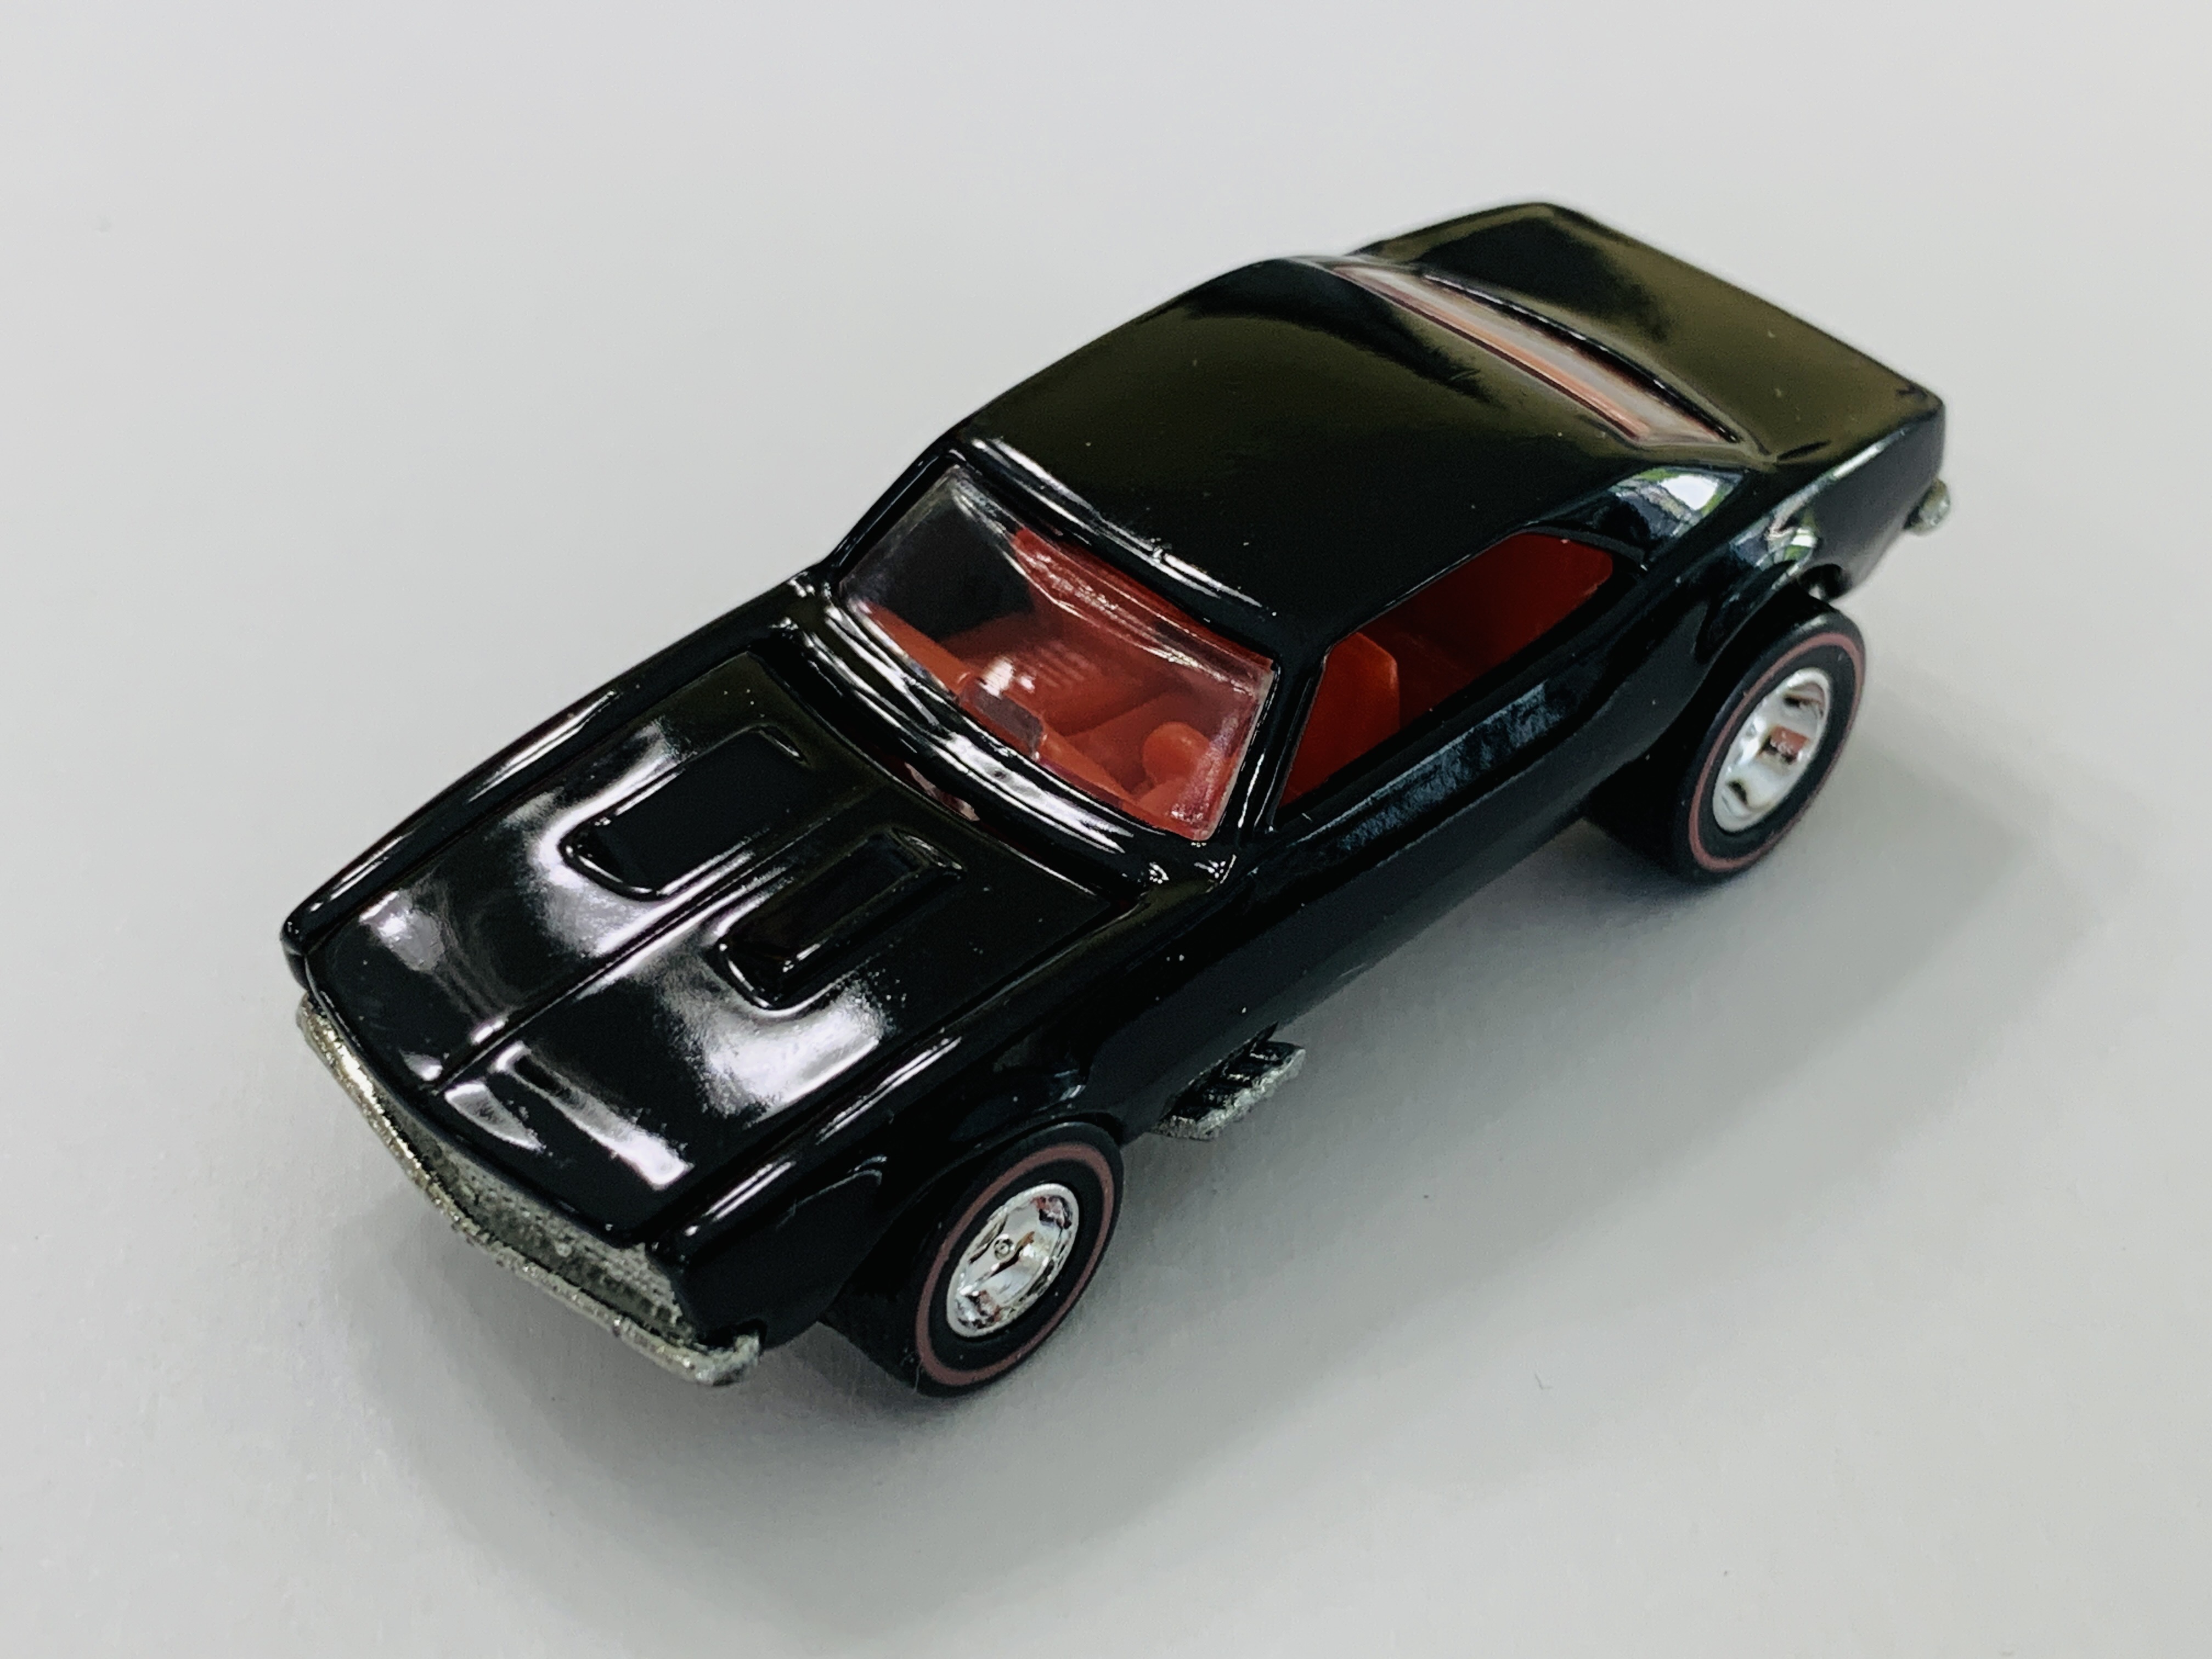 Hot Wheels Hall Of Fame Top 10 '67 Camaro